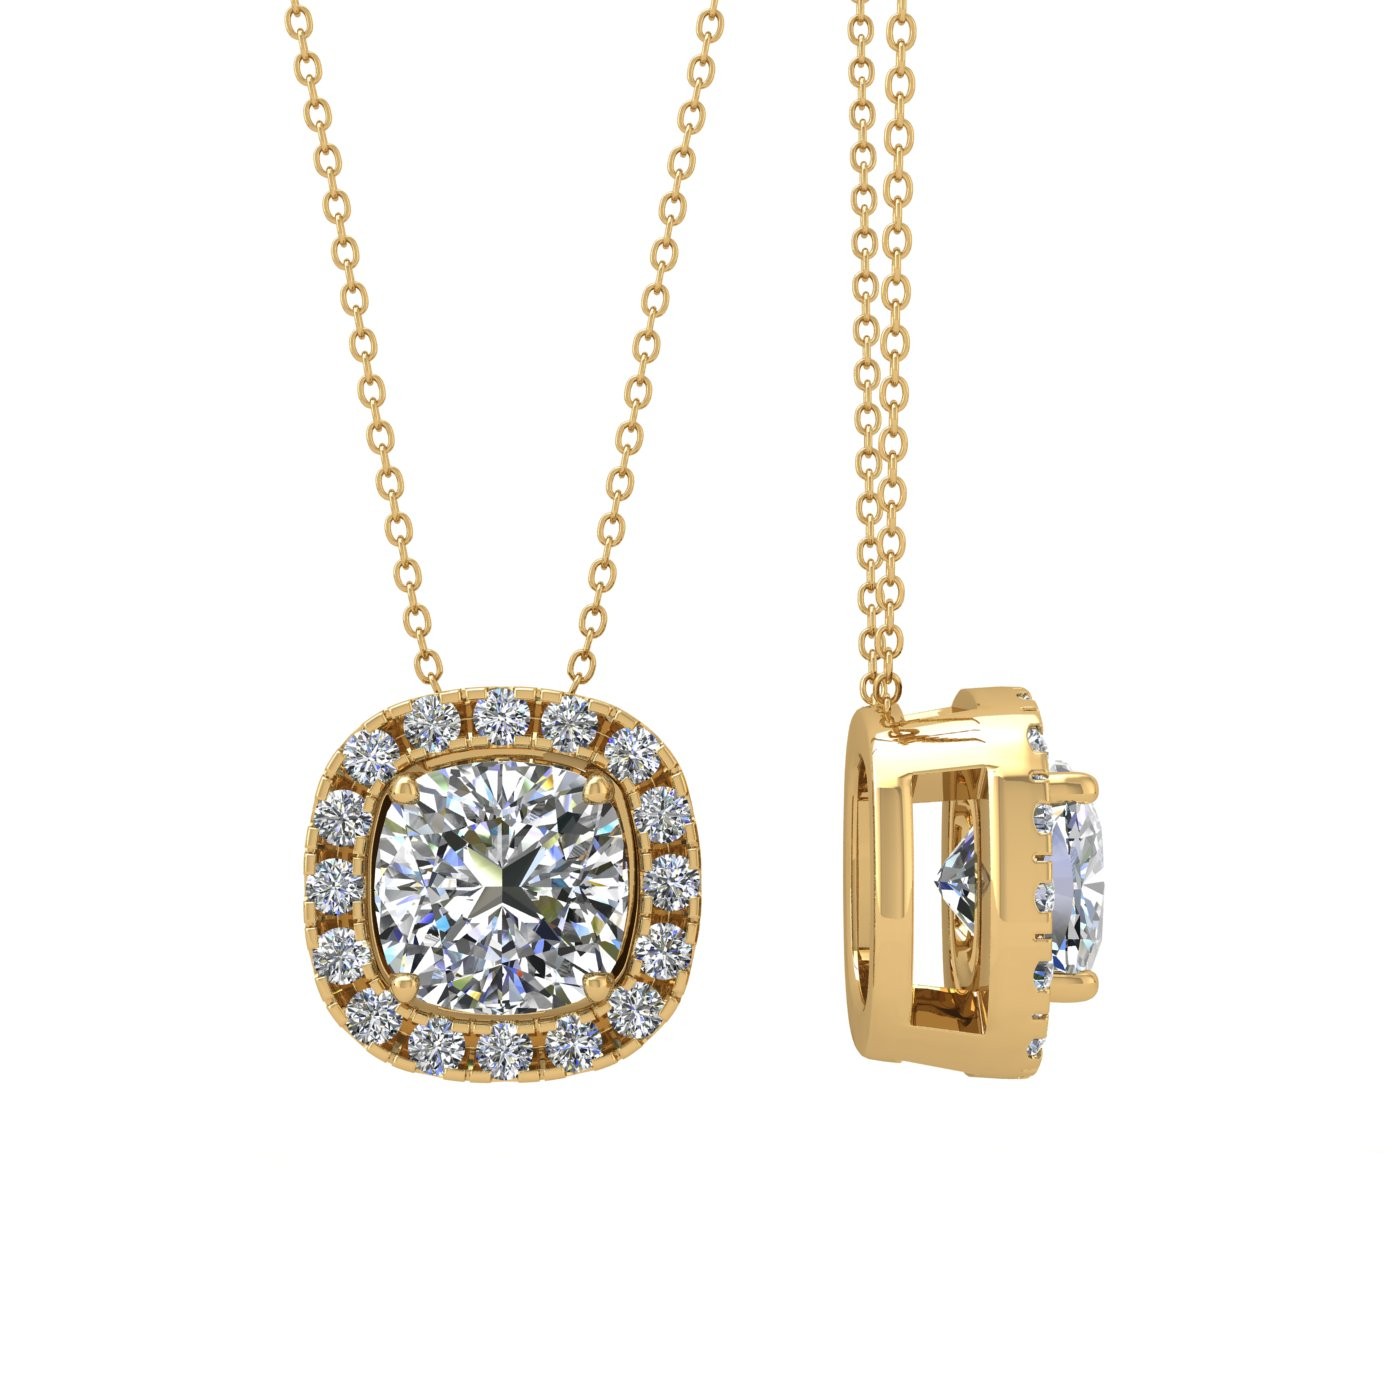 18k yellow gold 0,3 ct 4 prongs cushion shape diamond pendant with diamond pavÉ set halo Photos & images